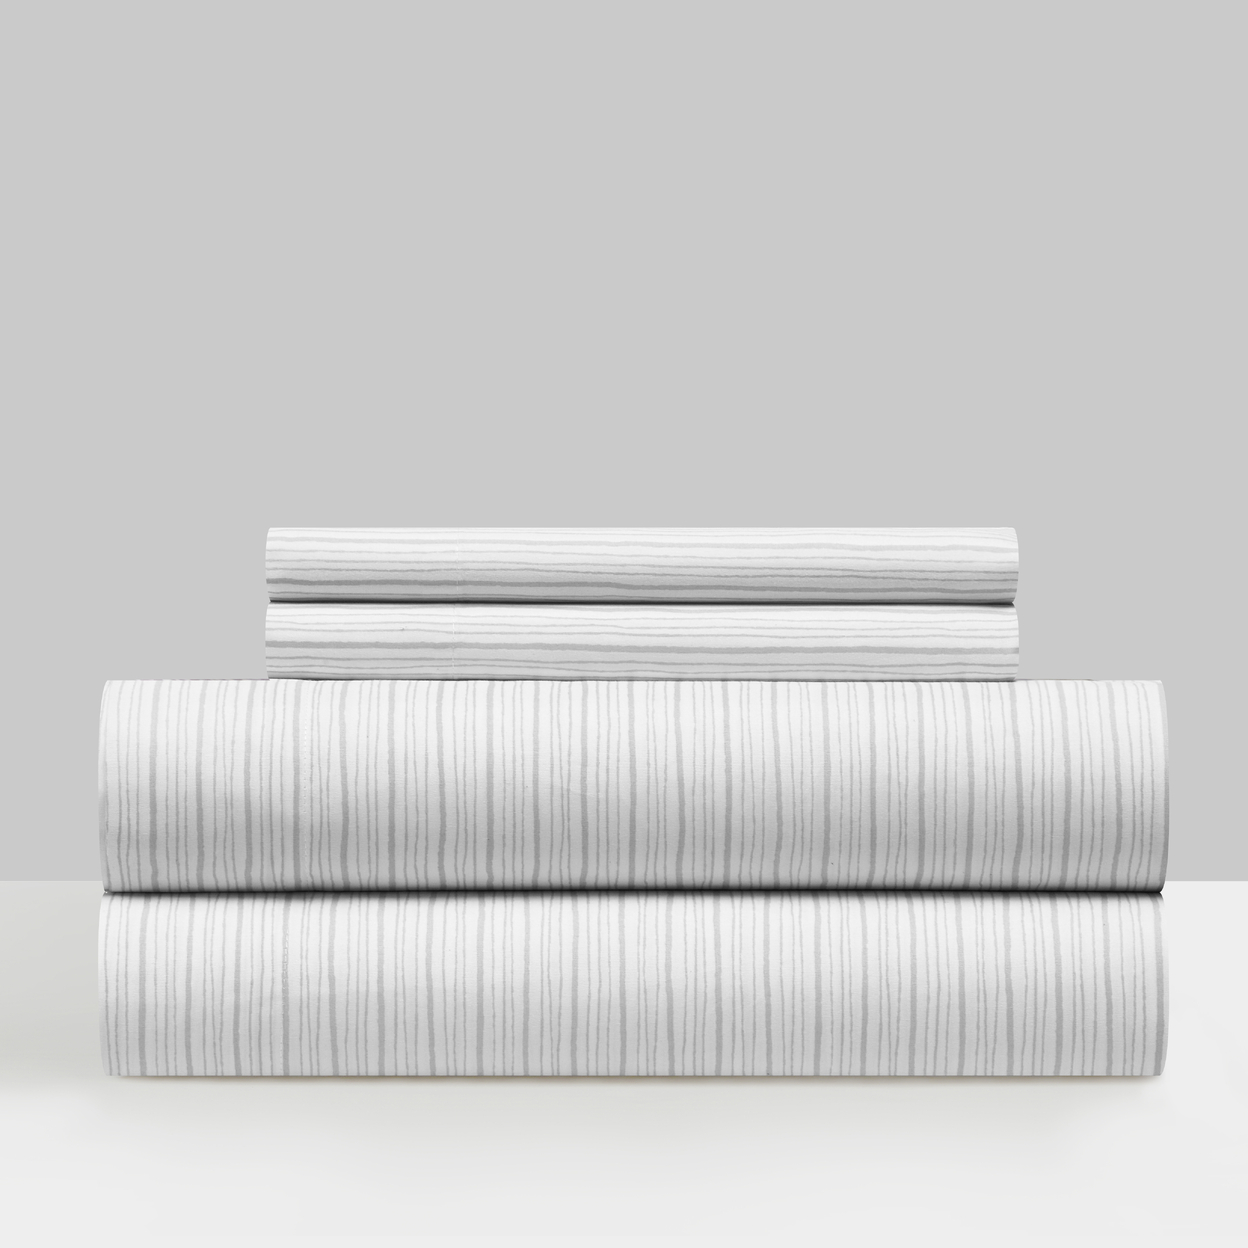 3 Or 4 Piece Silky Soft Brushed Microfiber Sheet Set - Samara Grey, Queen